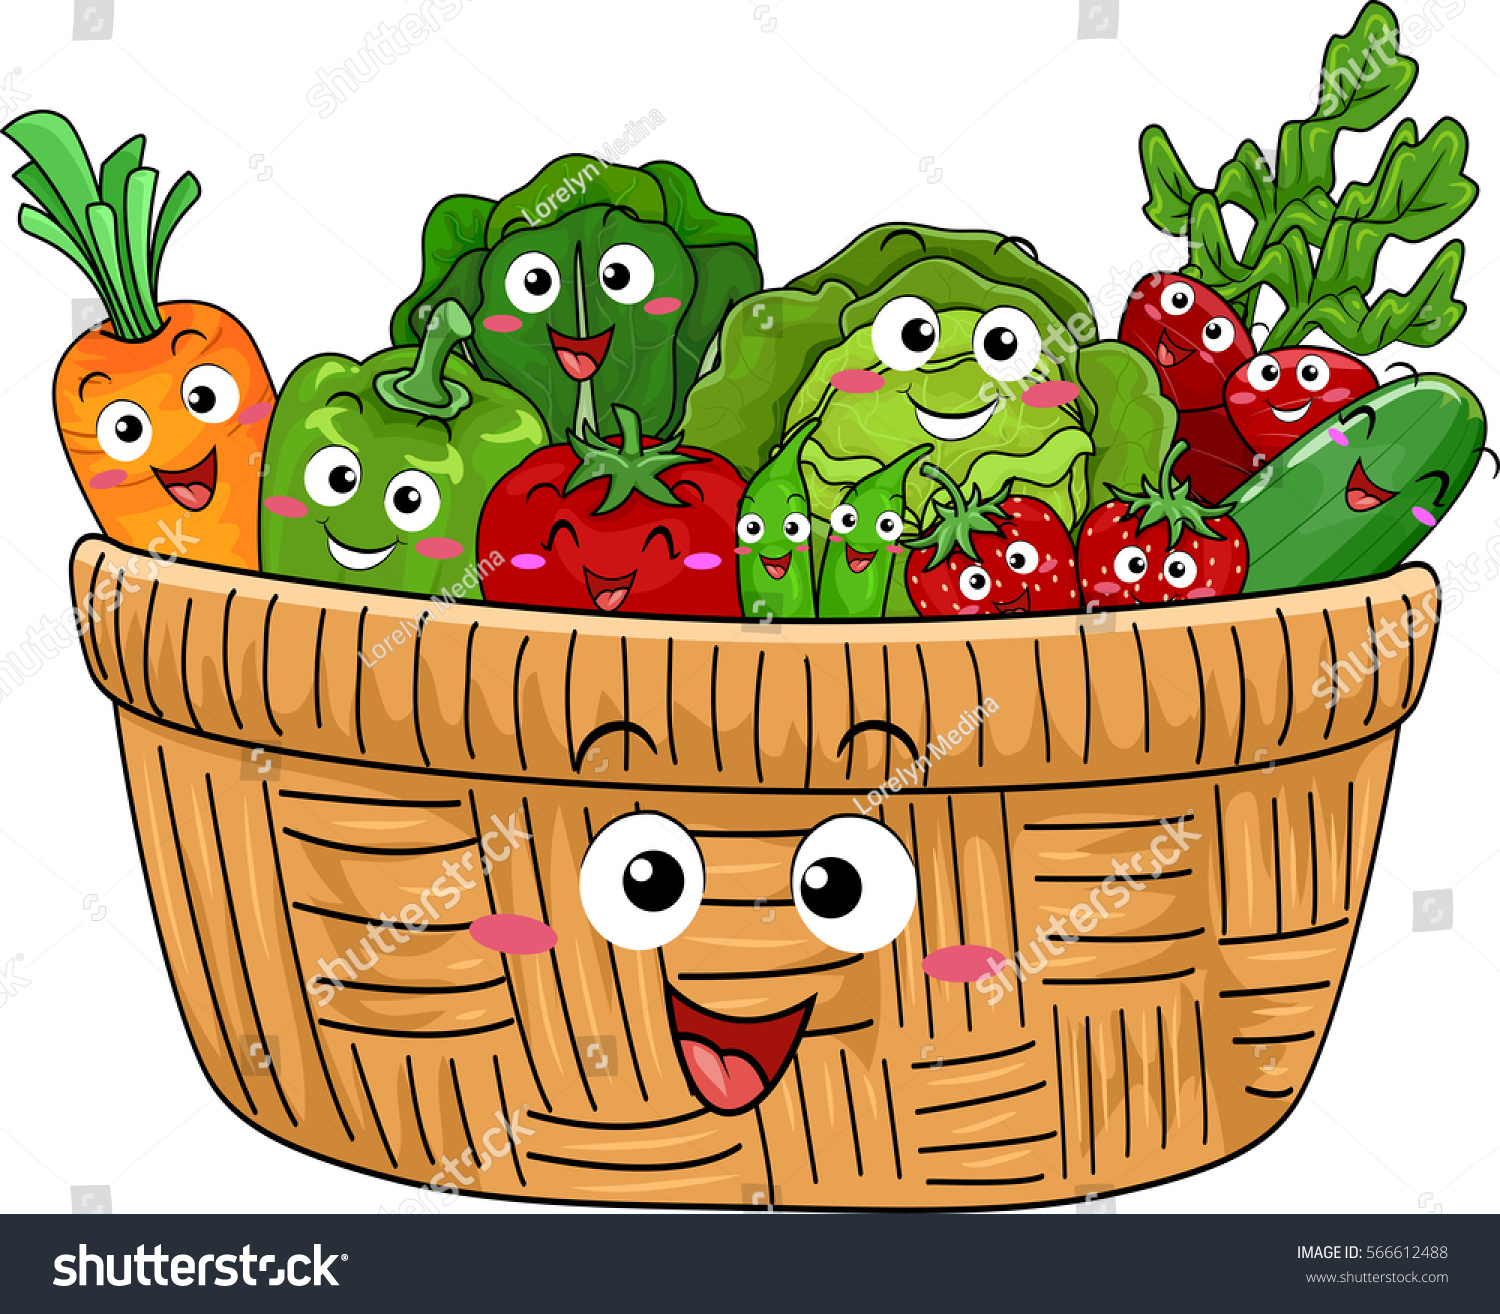 Картинки Овощи В Корзинке Для Детского Сада